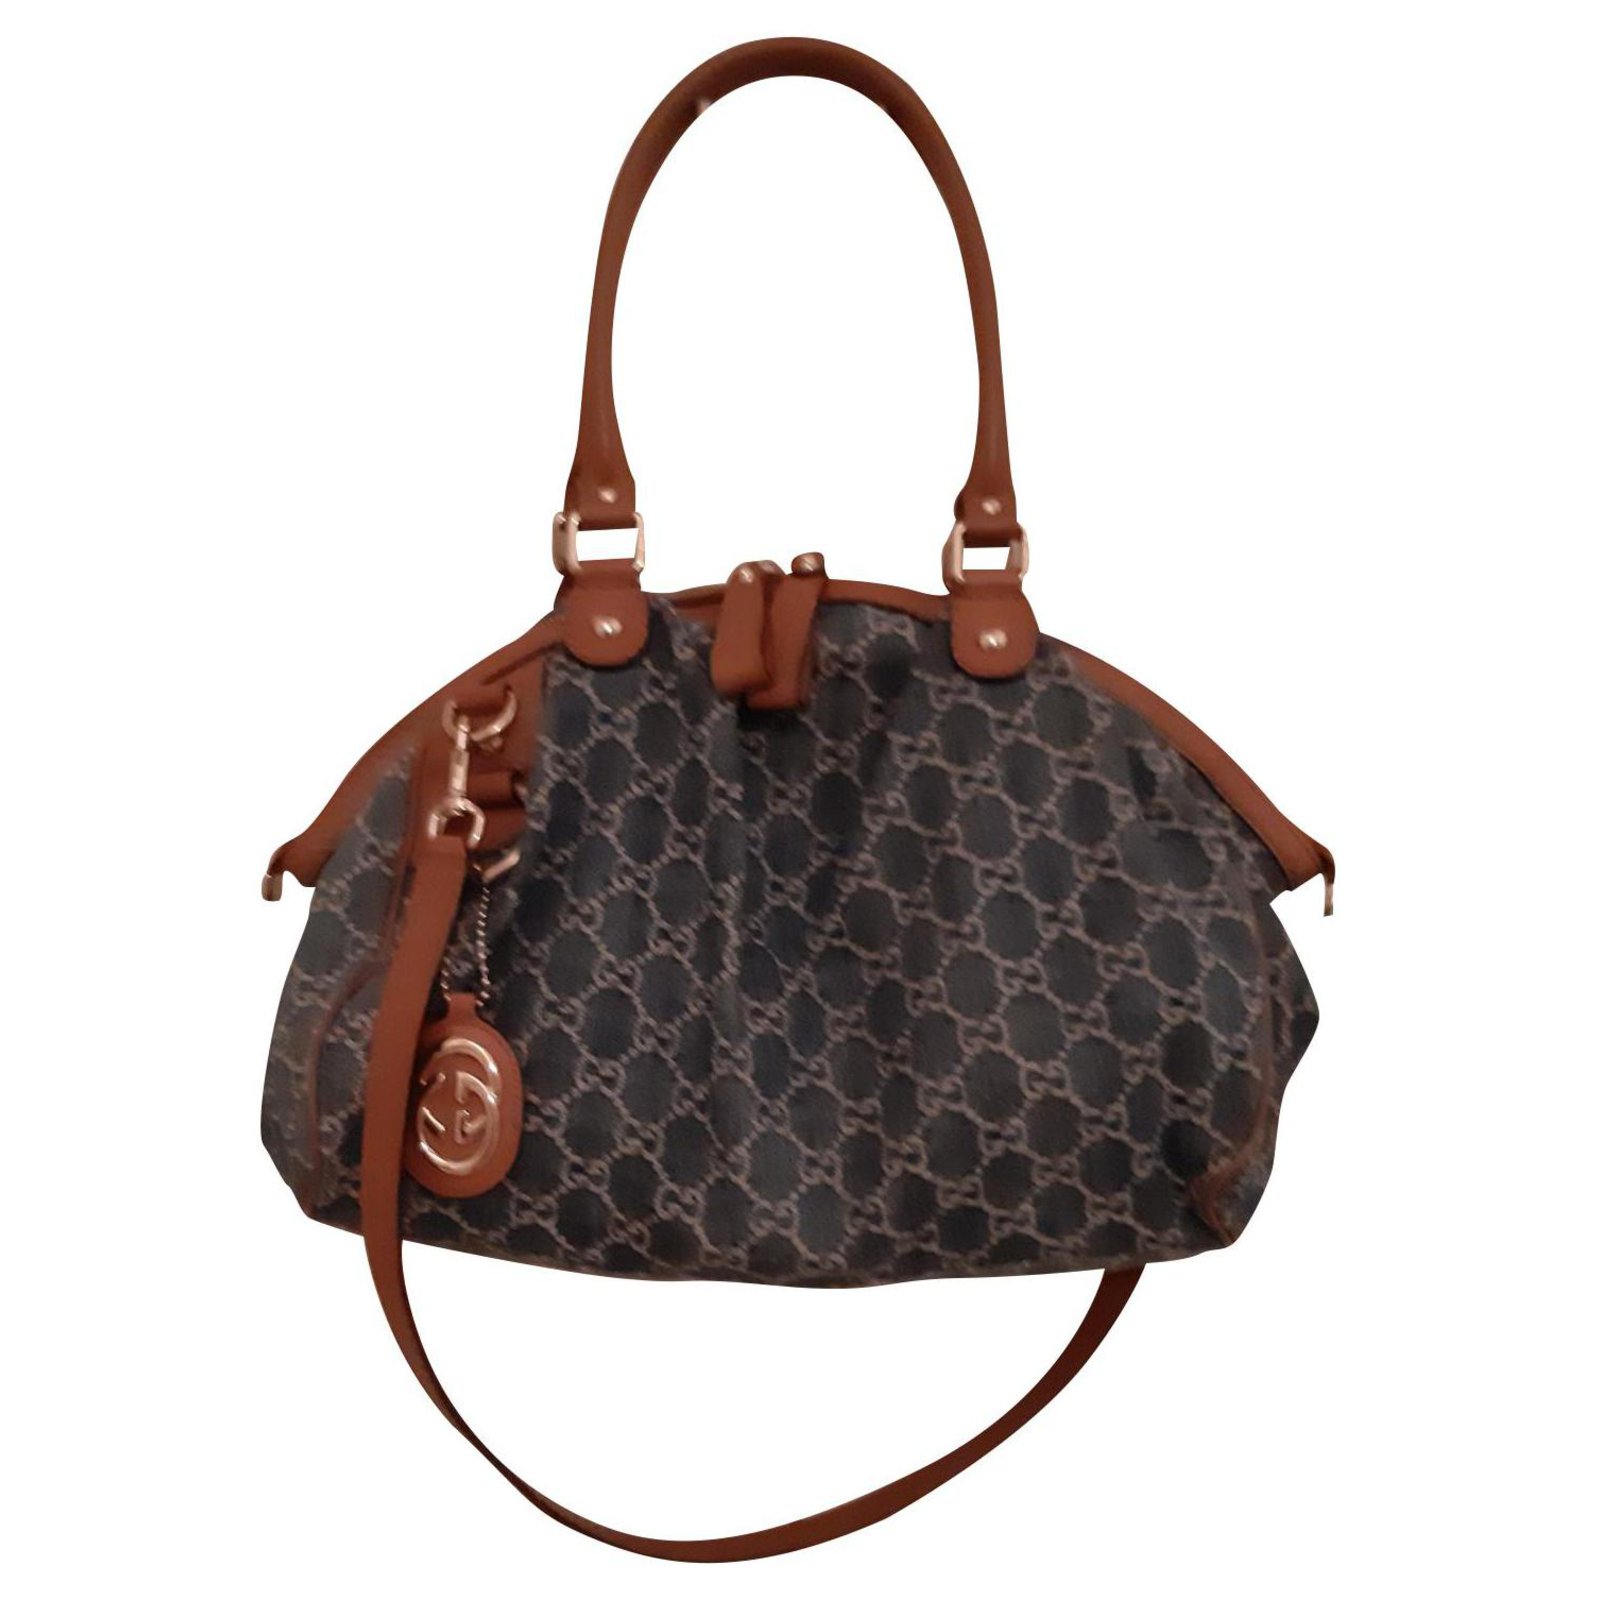 light leather handbags